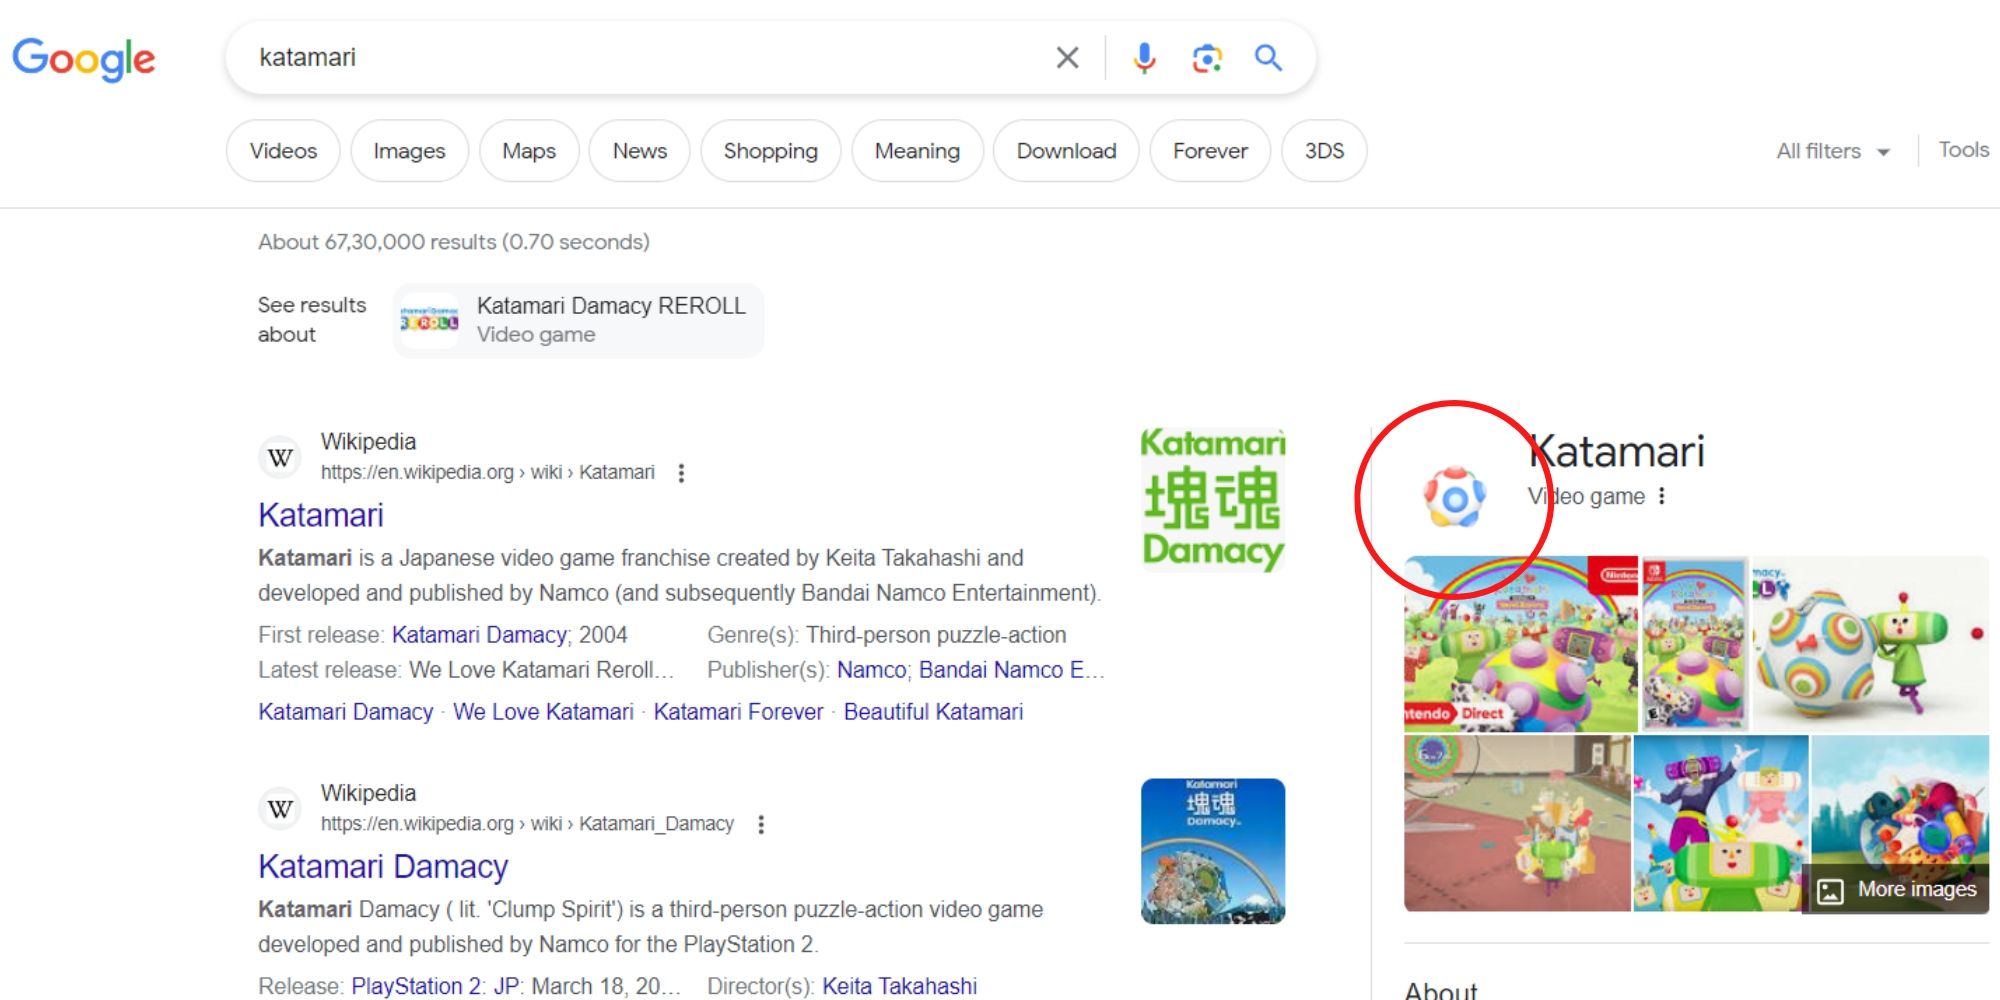 Google's Latest Easter Egg: A Katamari Minigame